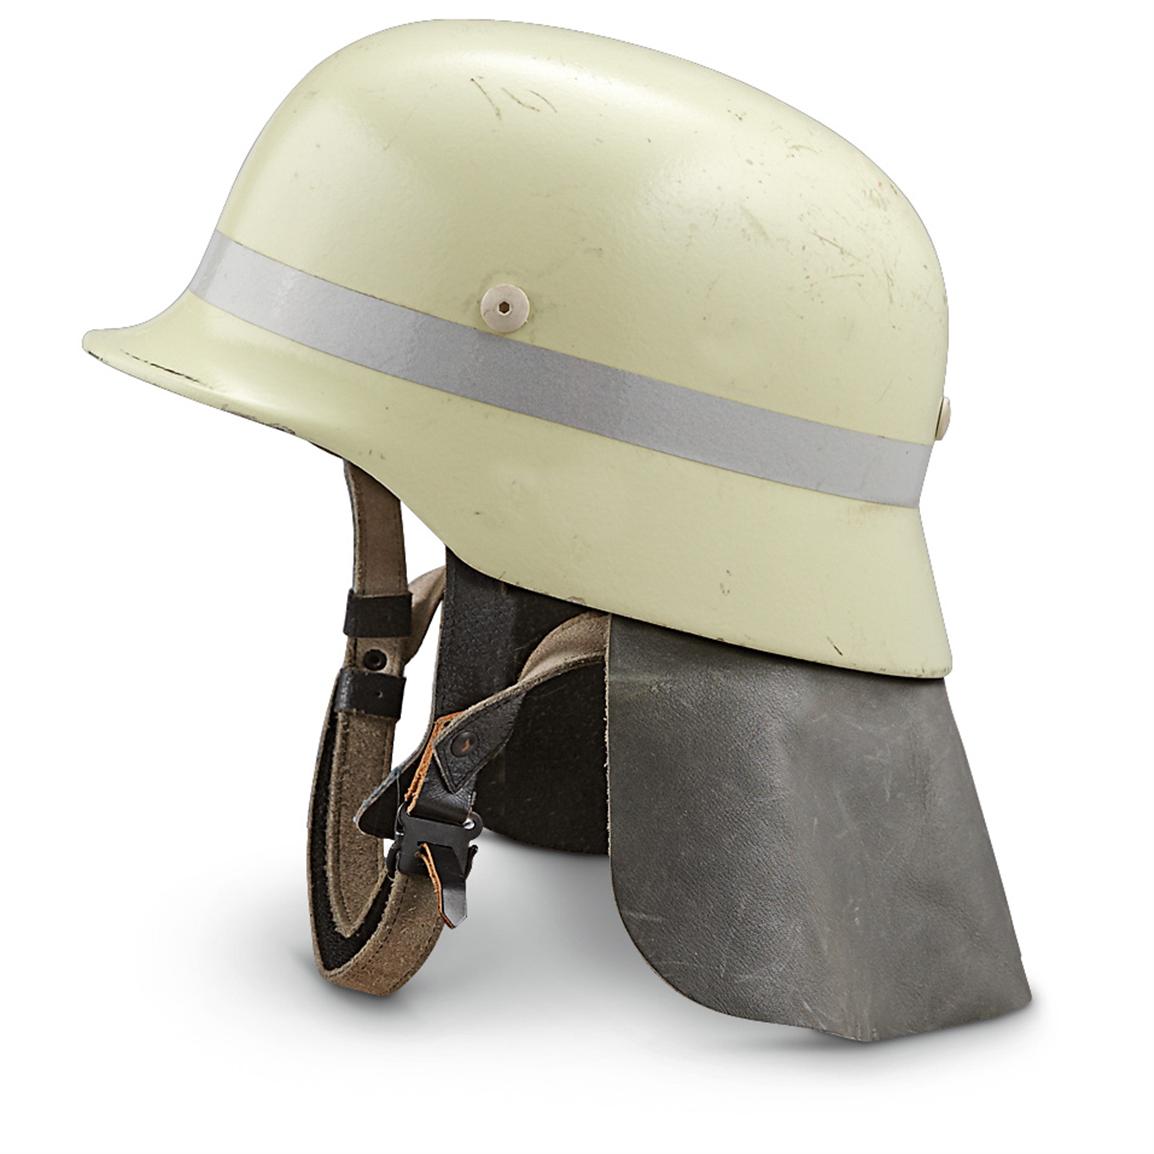 Used German WWII-style "Glowing" Fire Helmet - 293898, Helmets